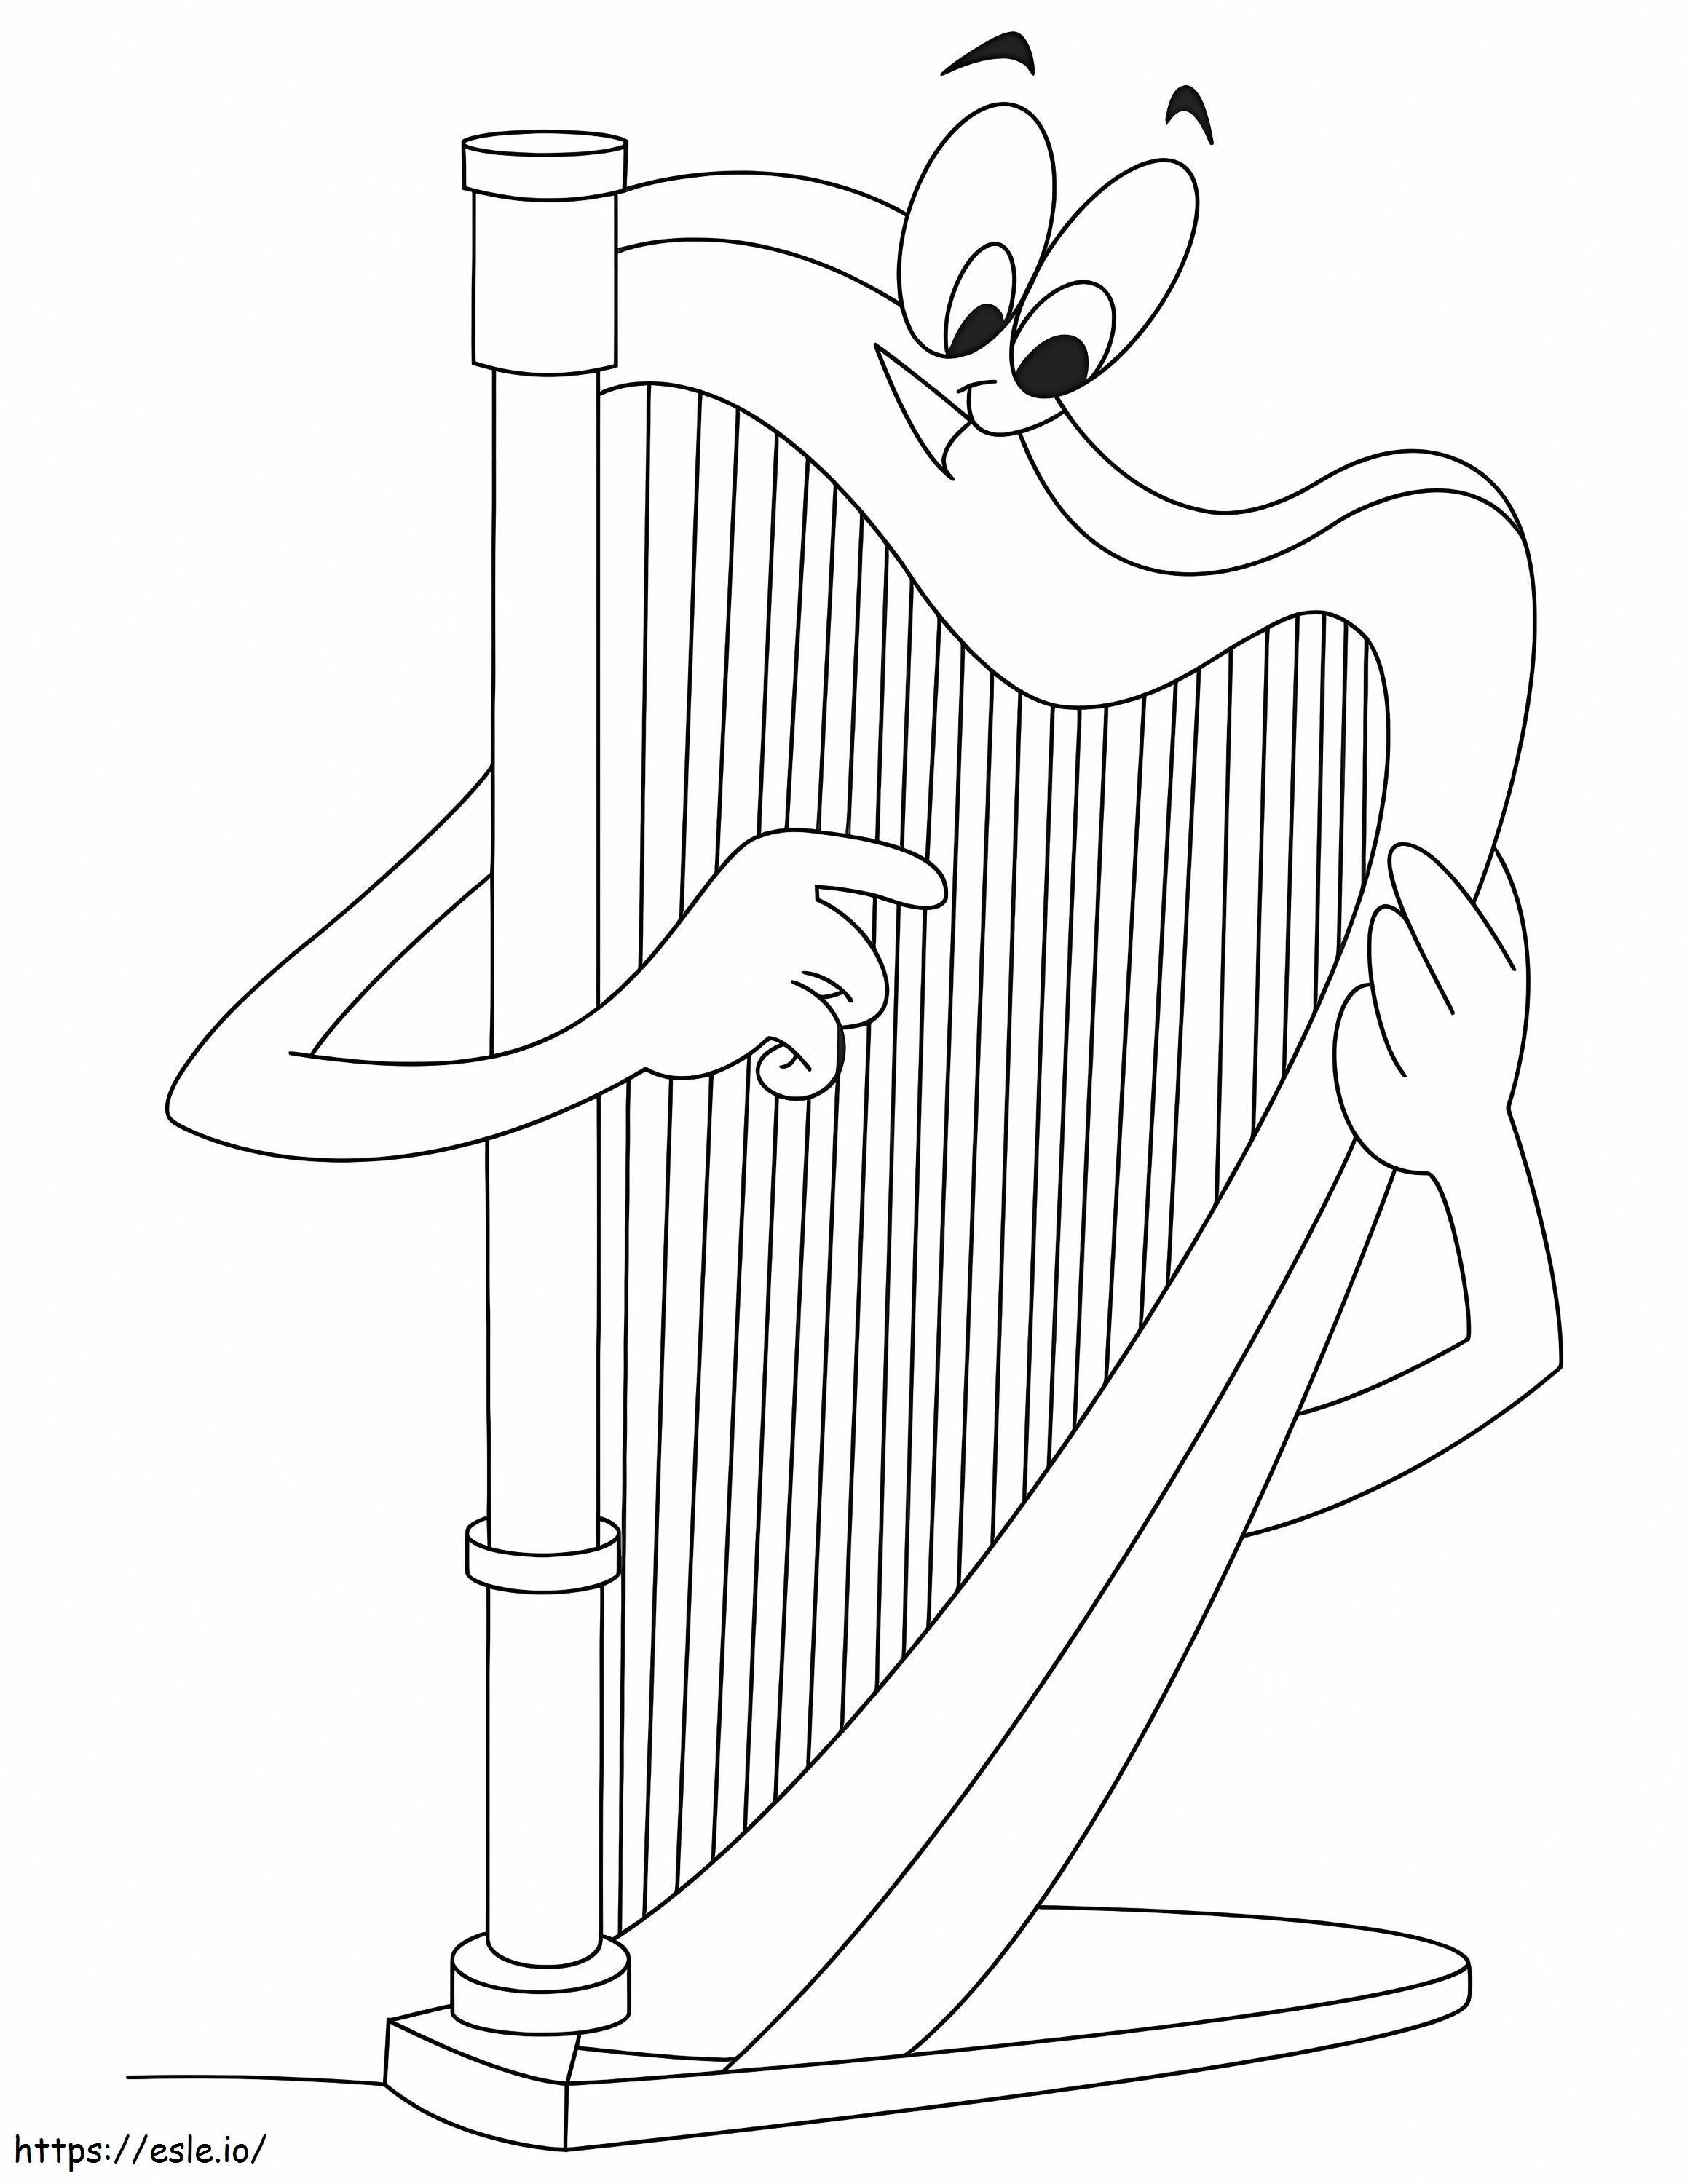 Harfa rysunkowa kolorowanka